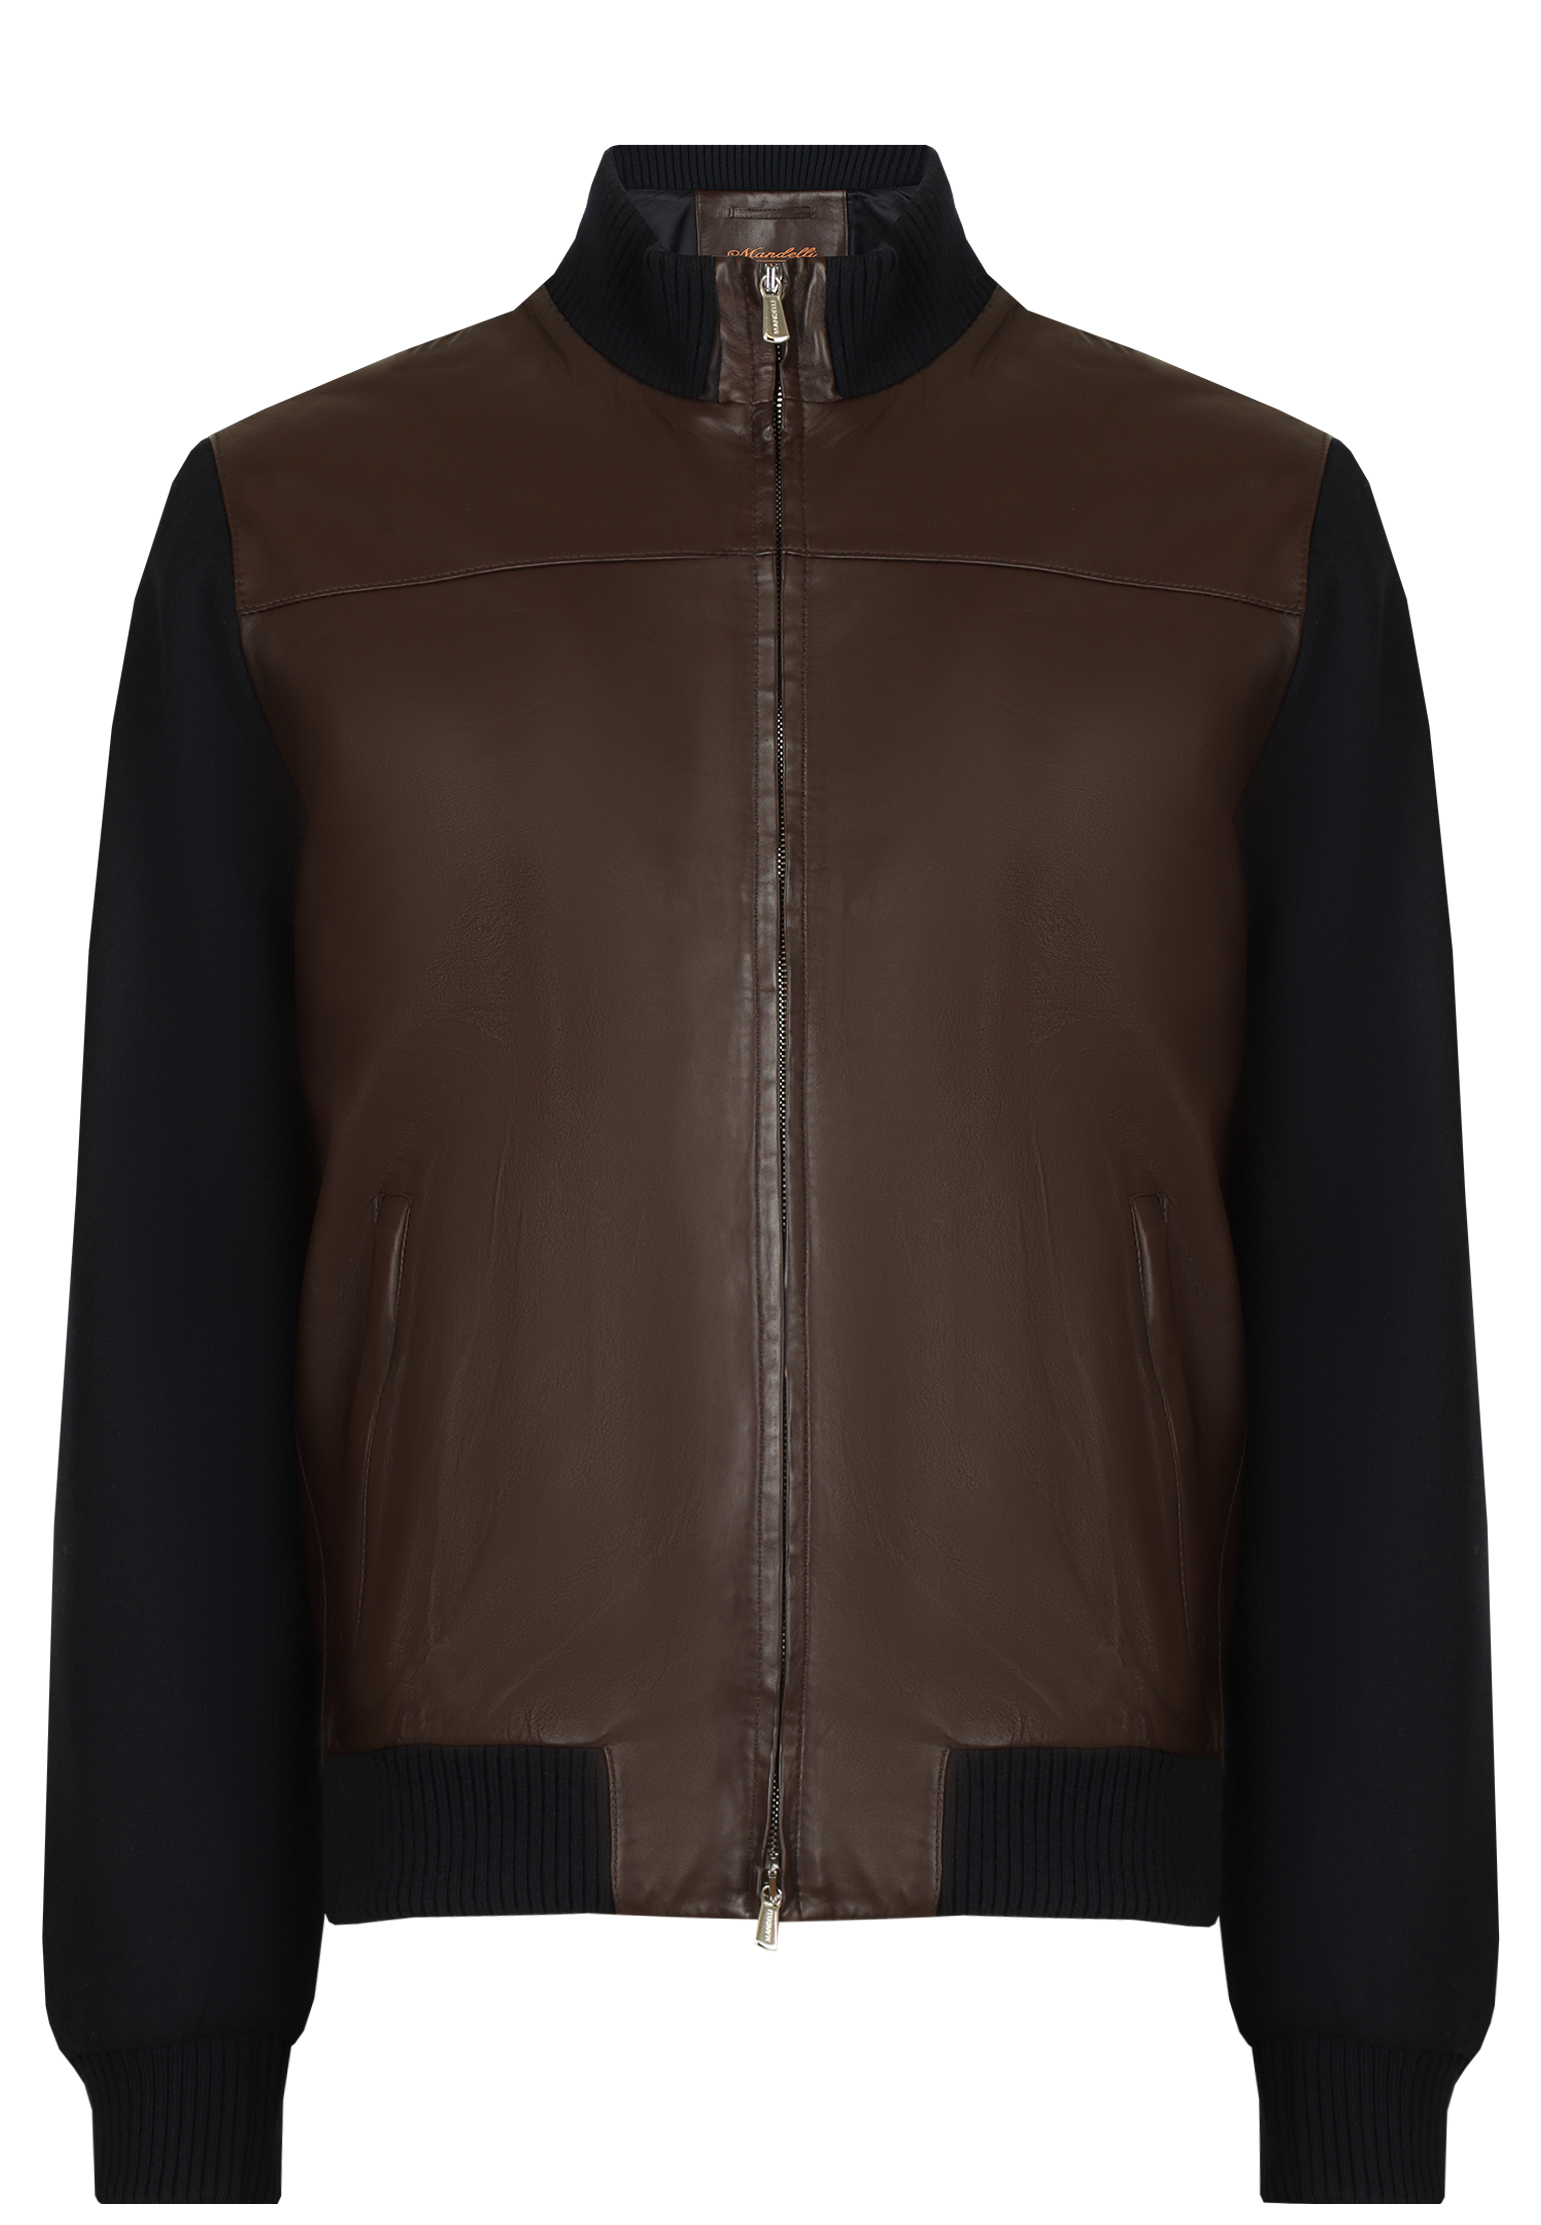 Куртка MANDELLI Коричневый, размер 52 150700 - фото 1